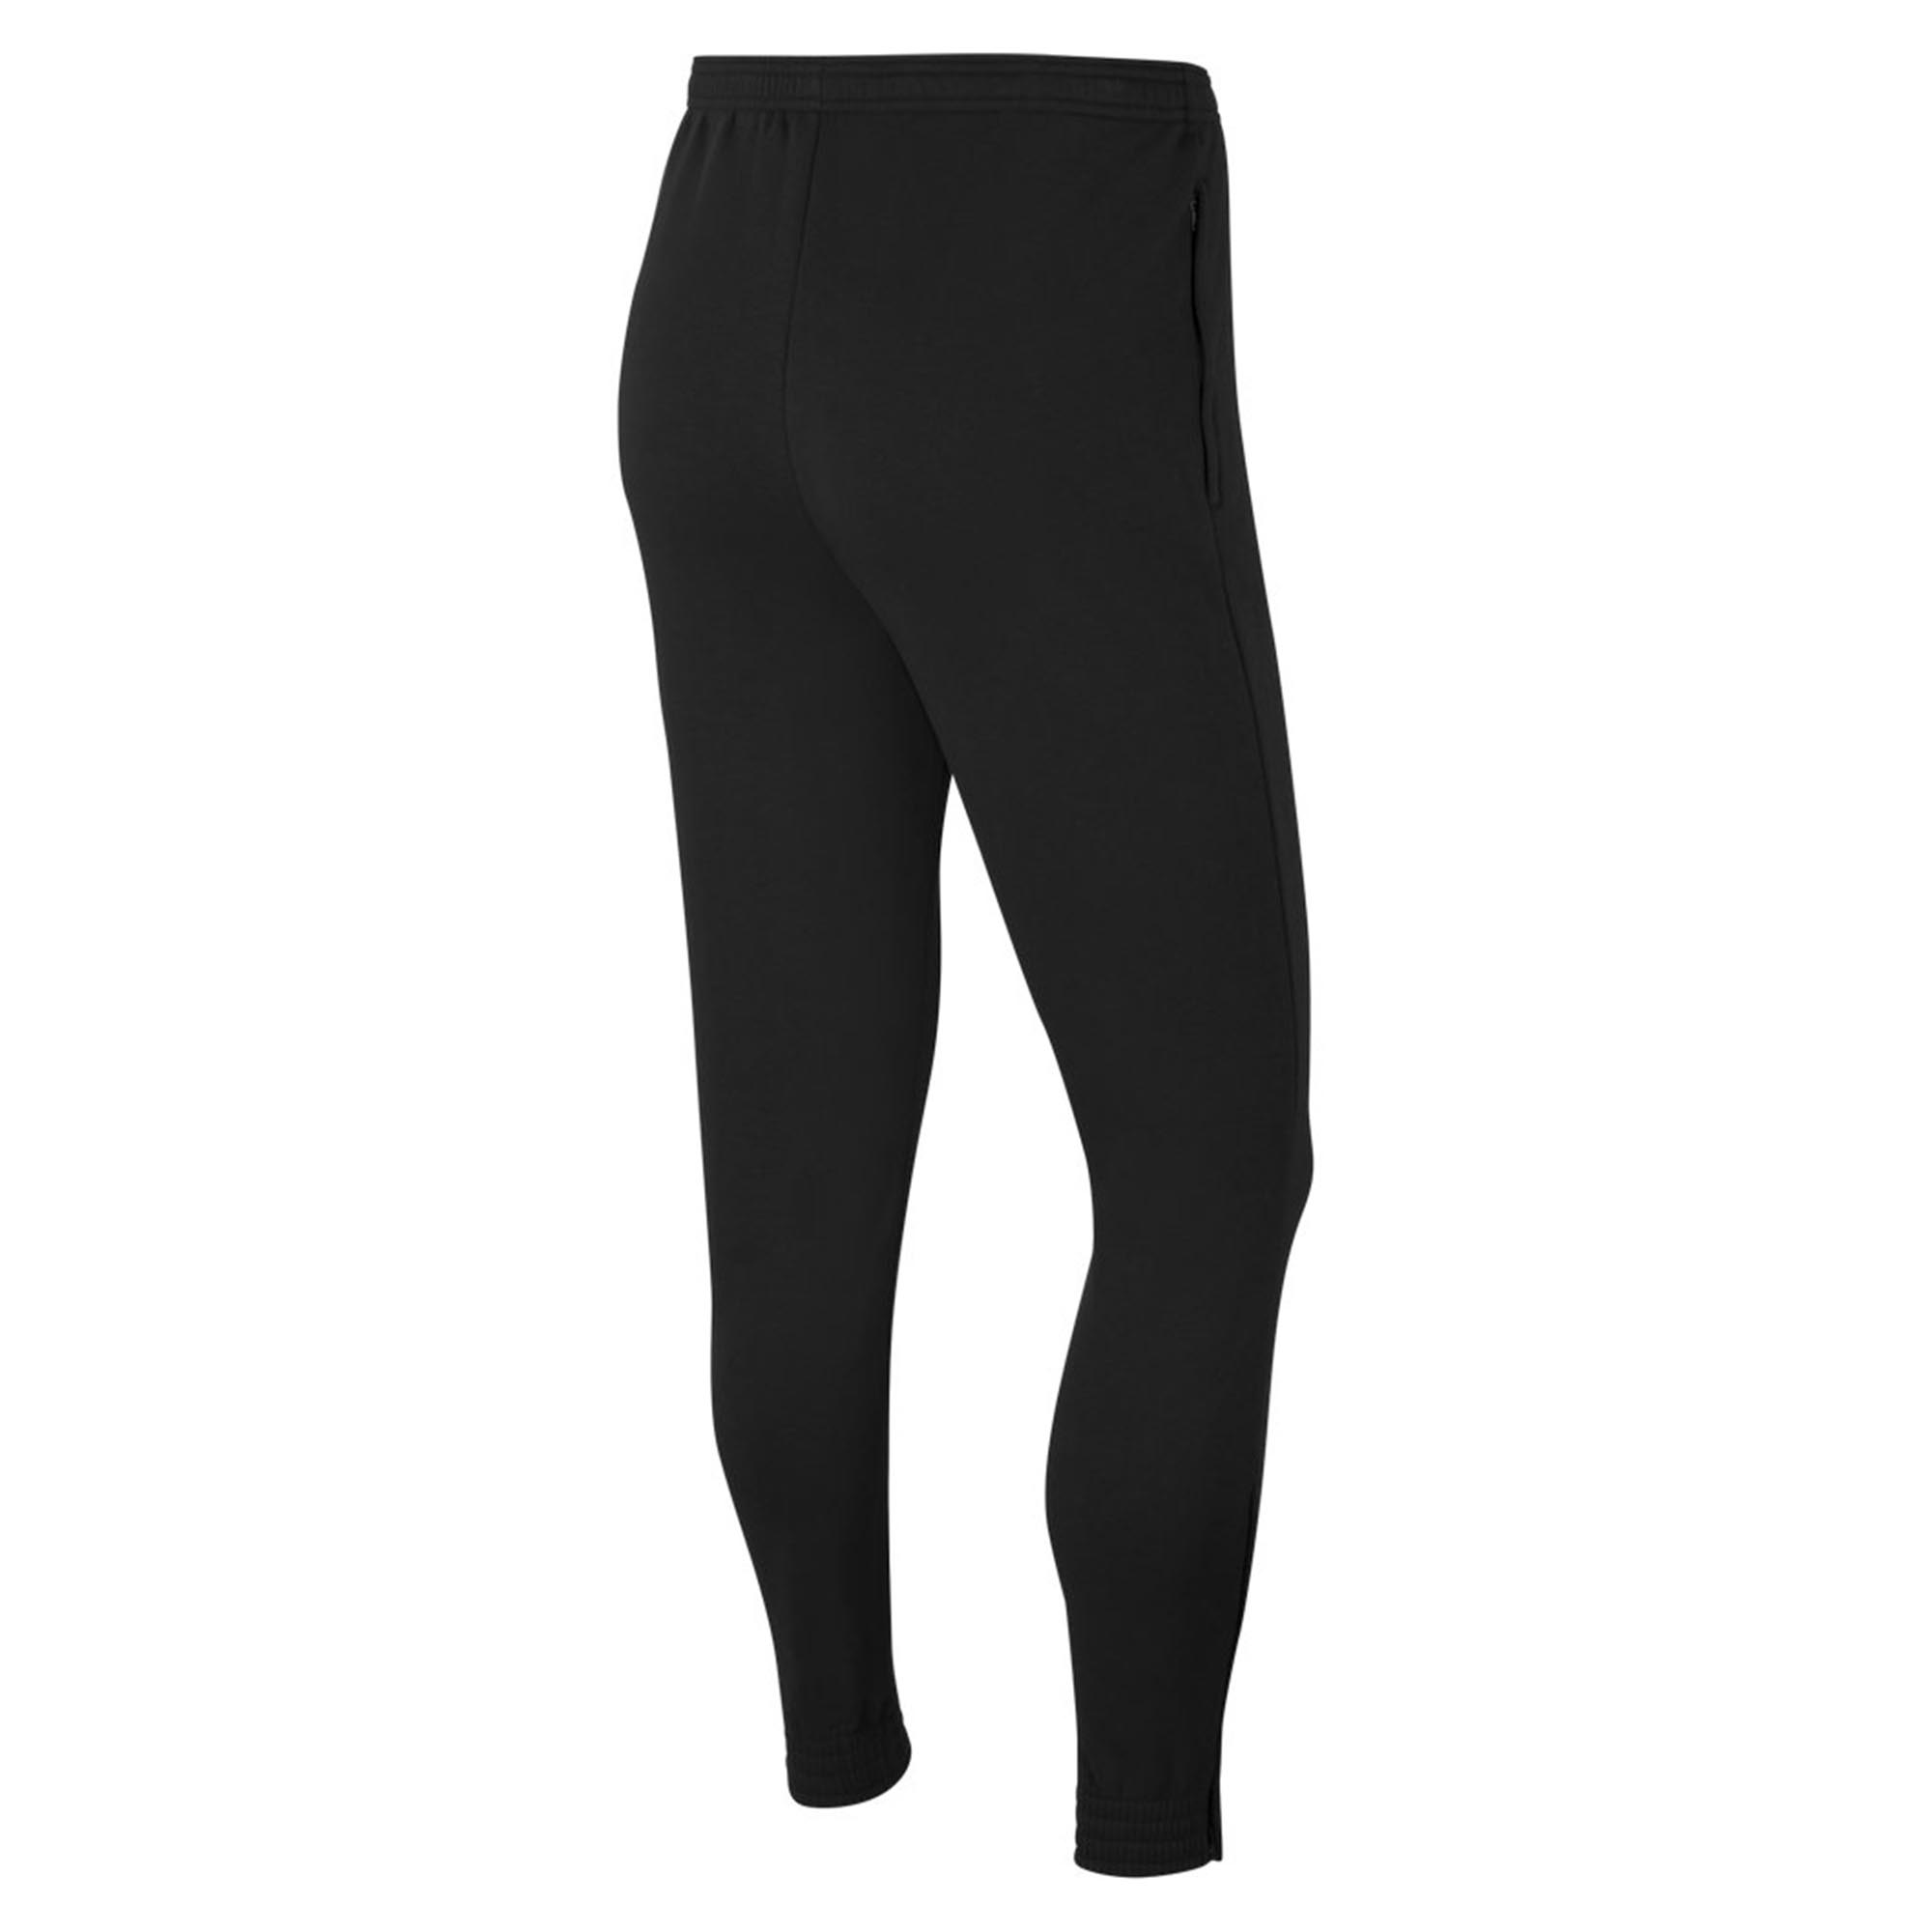 Nike Herren Trainingshose TEAM CLUB 20 Pants schwarz Jogginghose